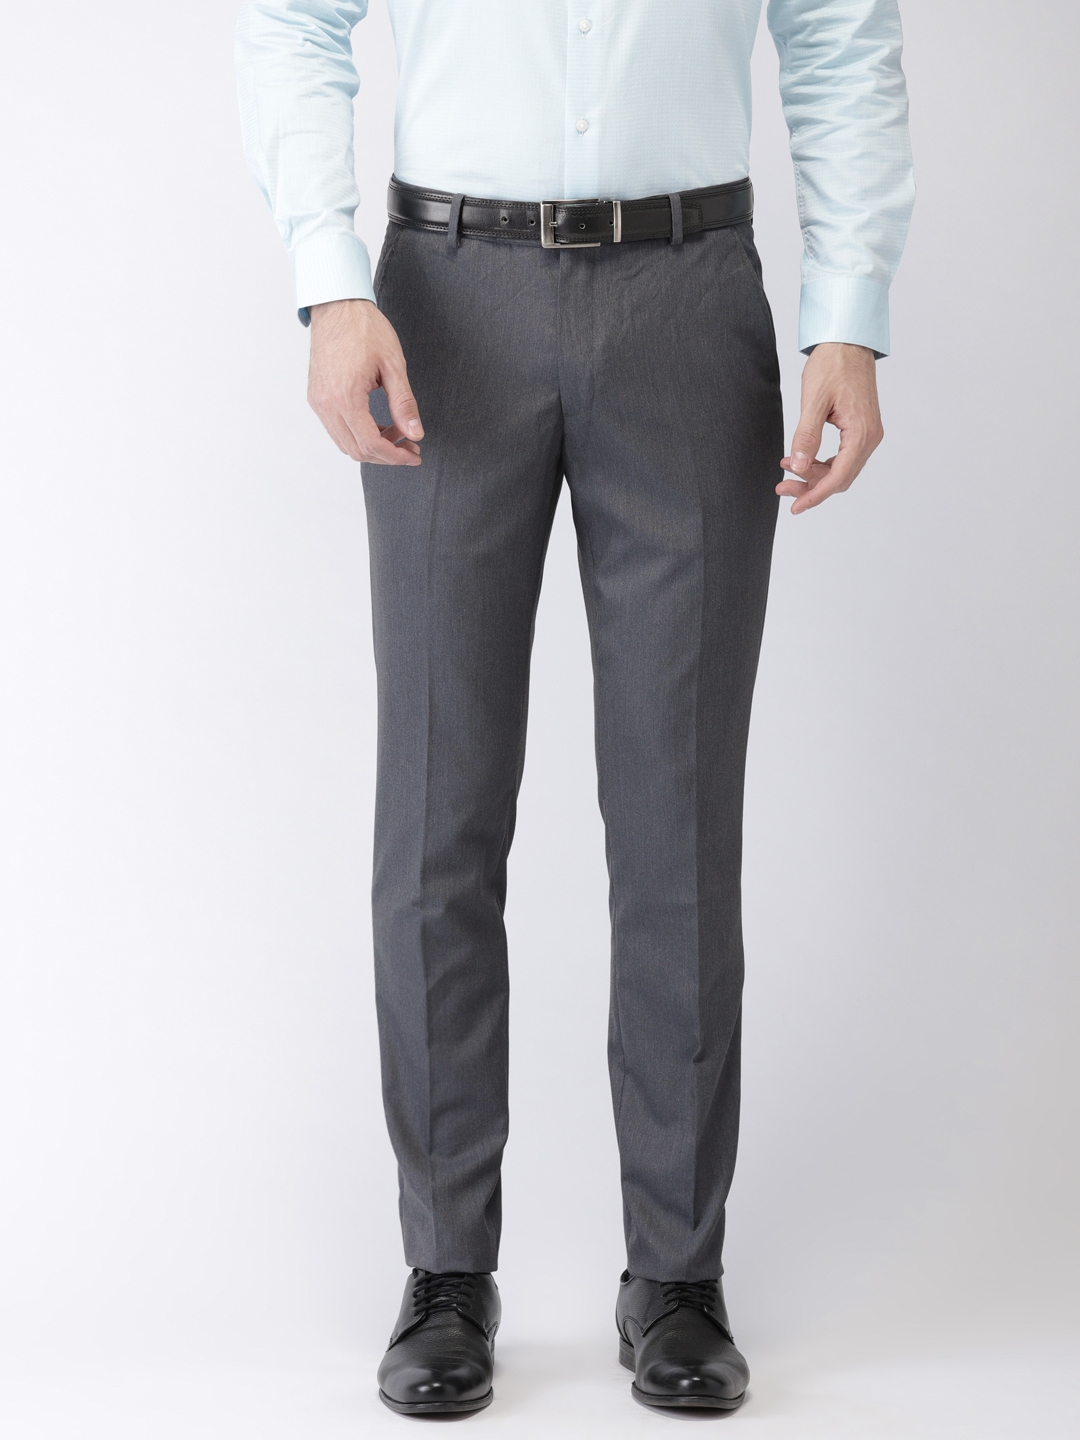 Buy Men Grey Slim Fit Textured Casual Trousers Online  720554  Allen Solly